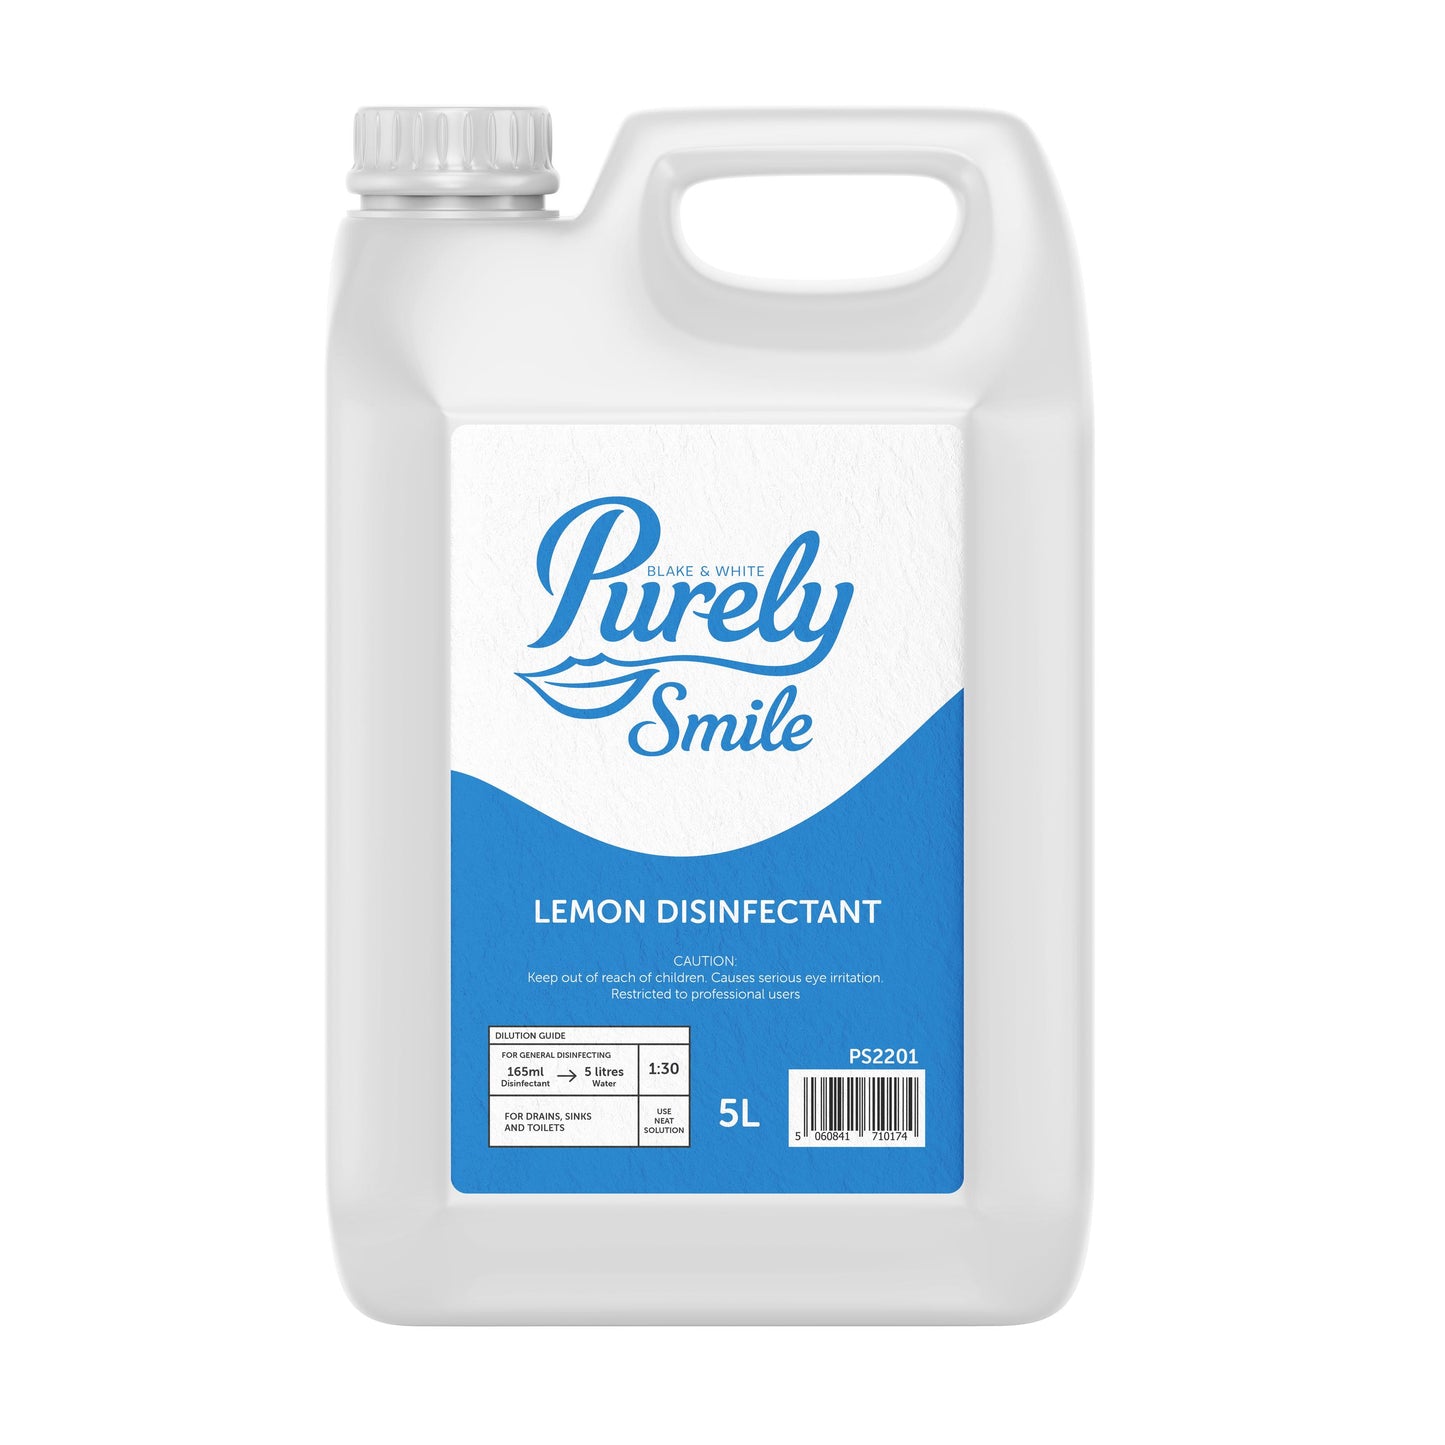 Purely Smile Lemon Disinfectant 5L